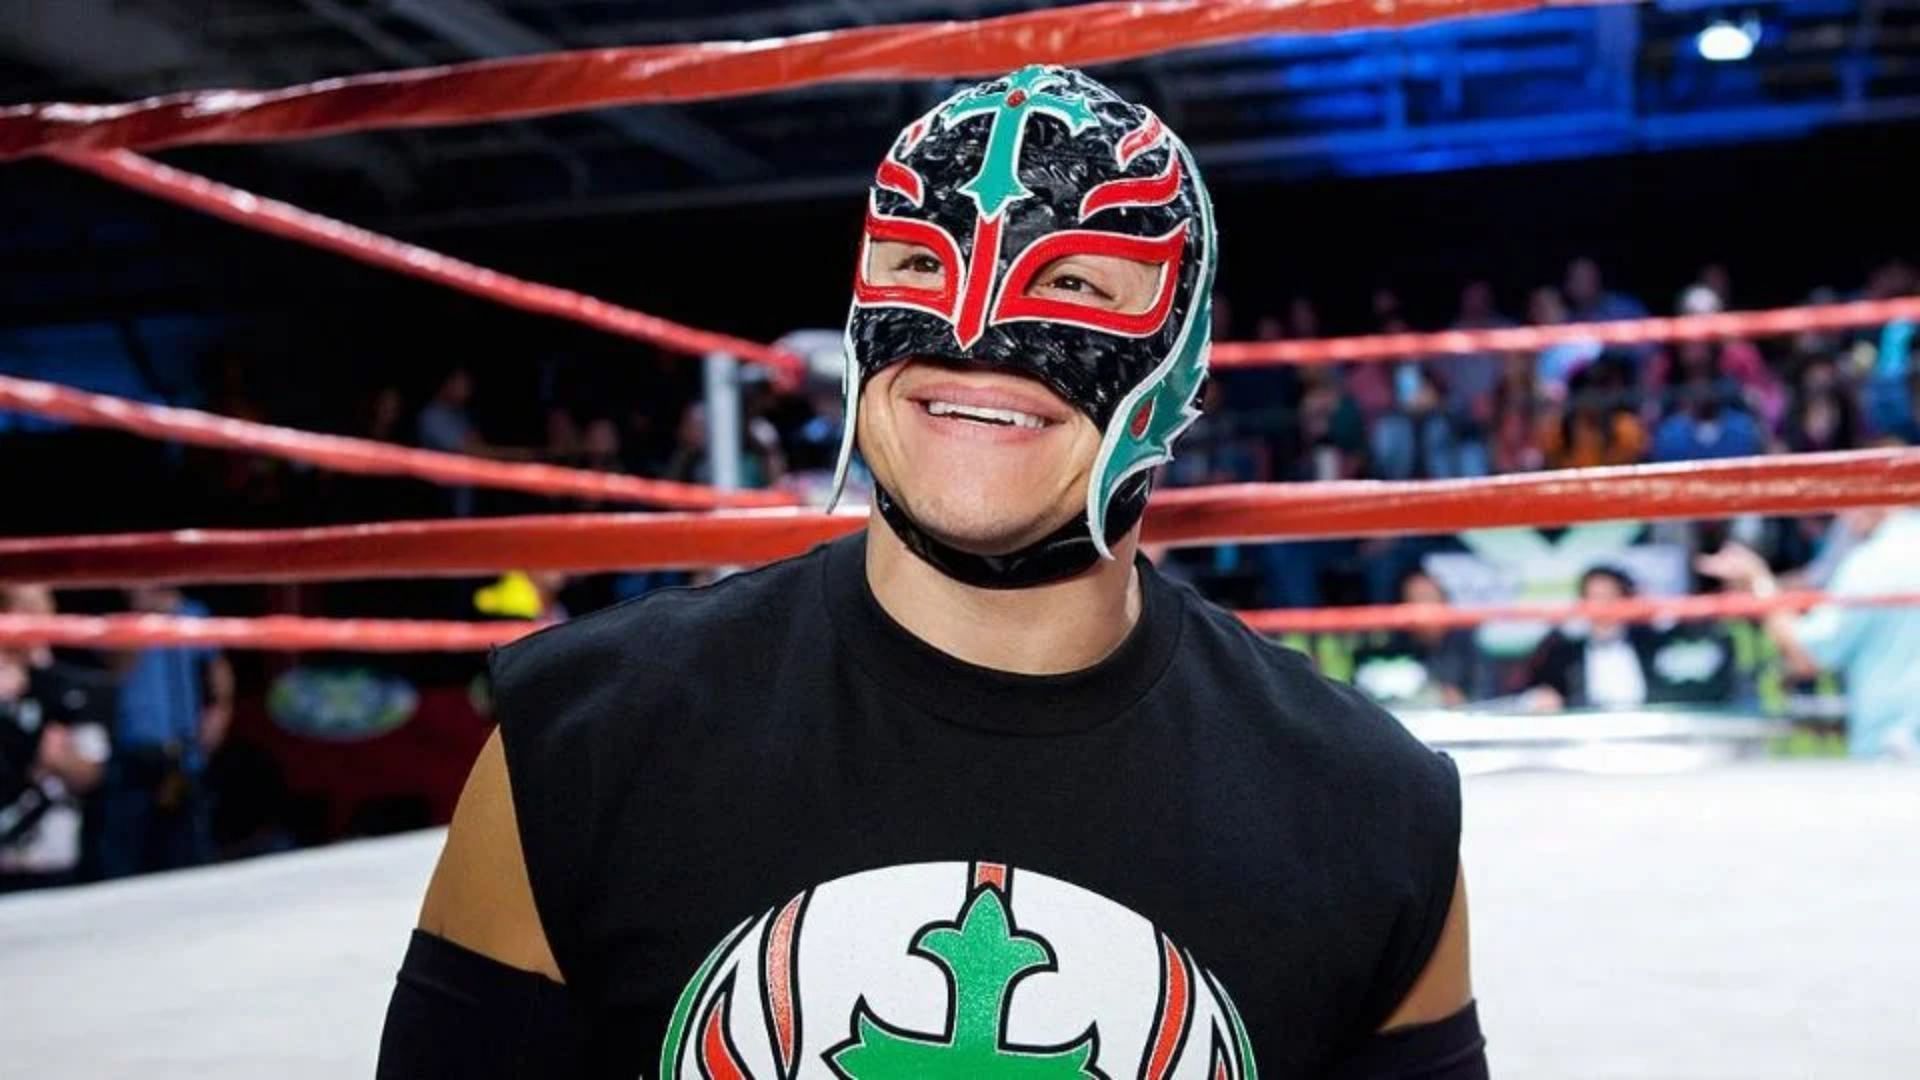 WWE Hall of Famer Rey Mysterio turned 49